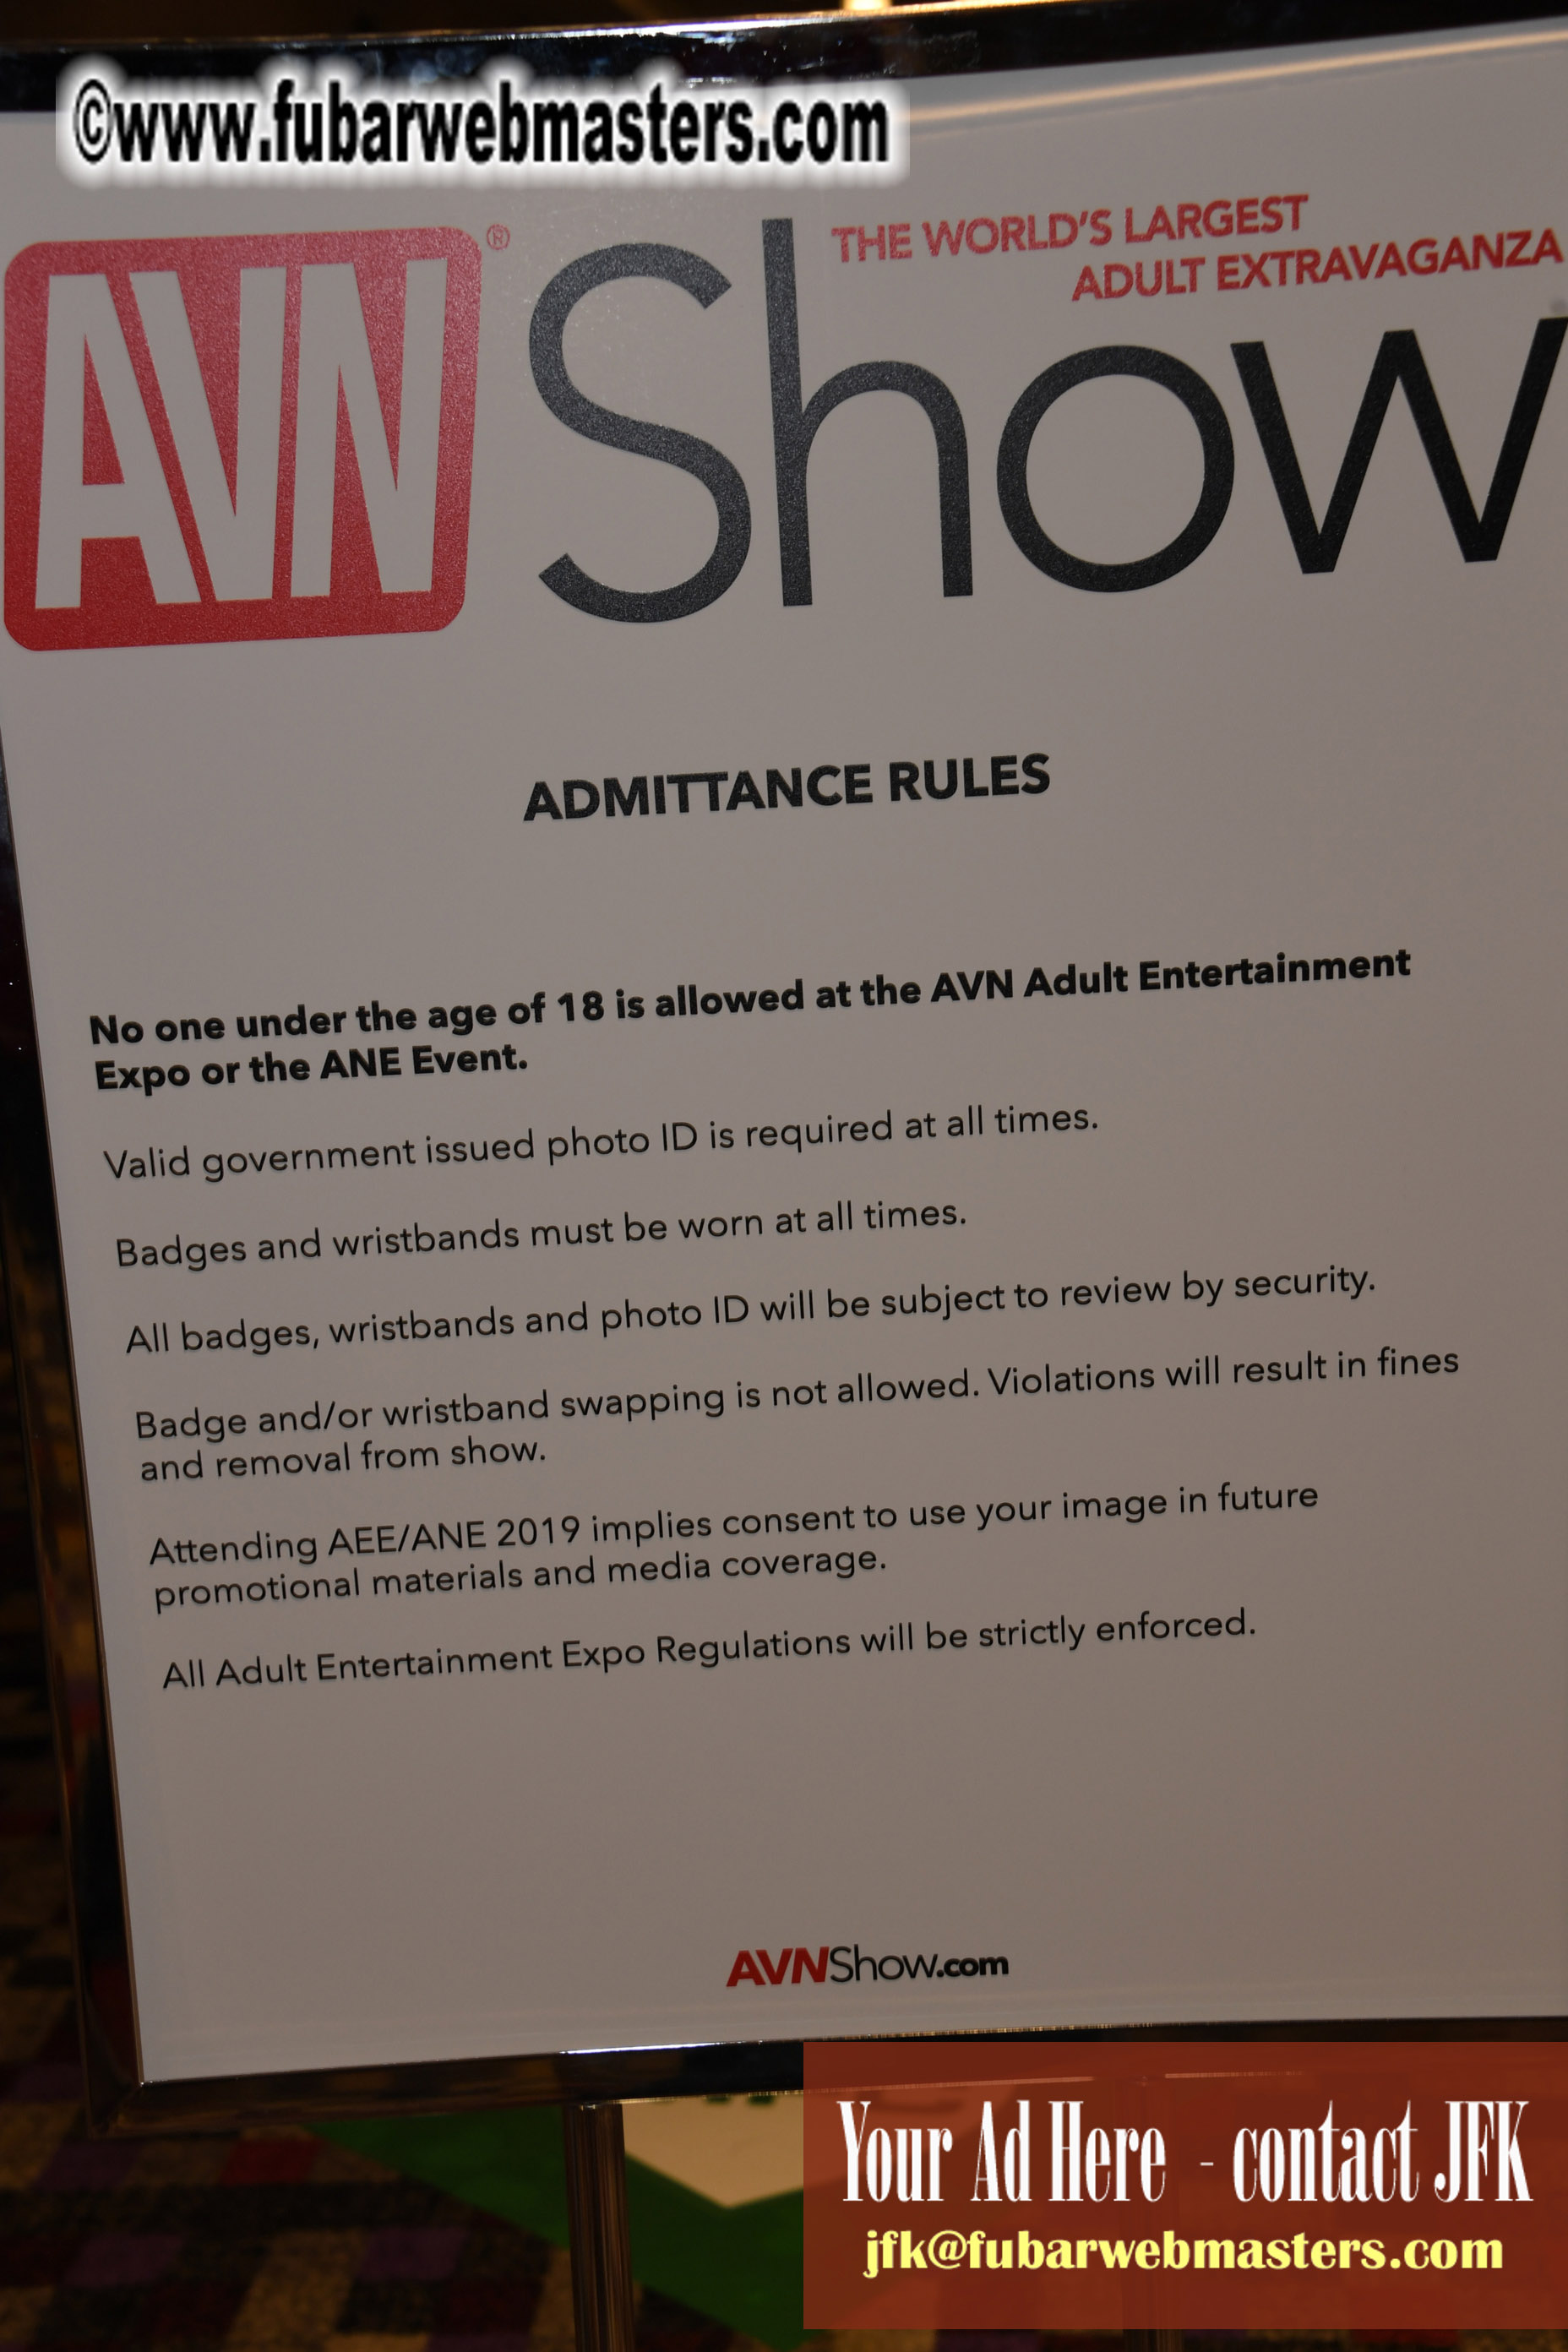 The AVN Show